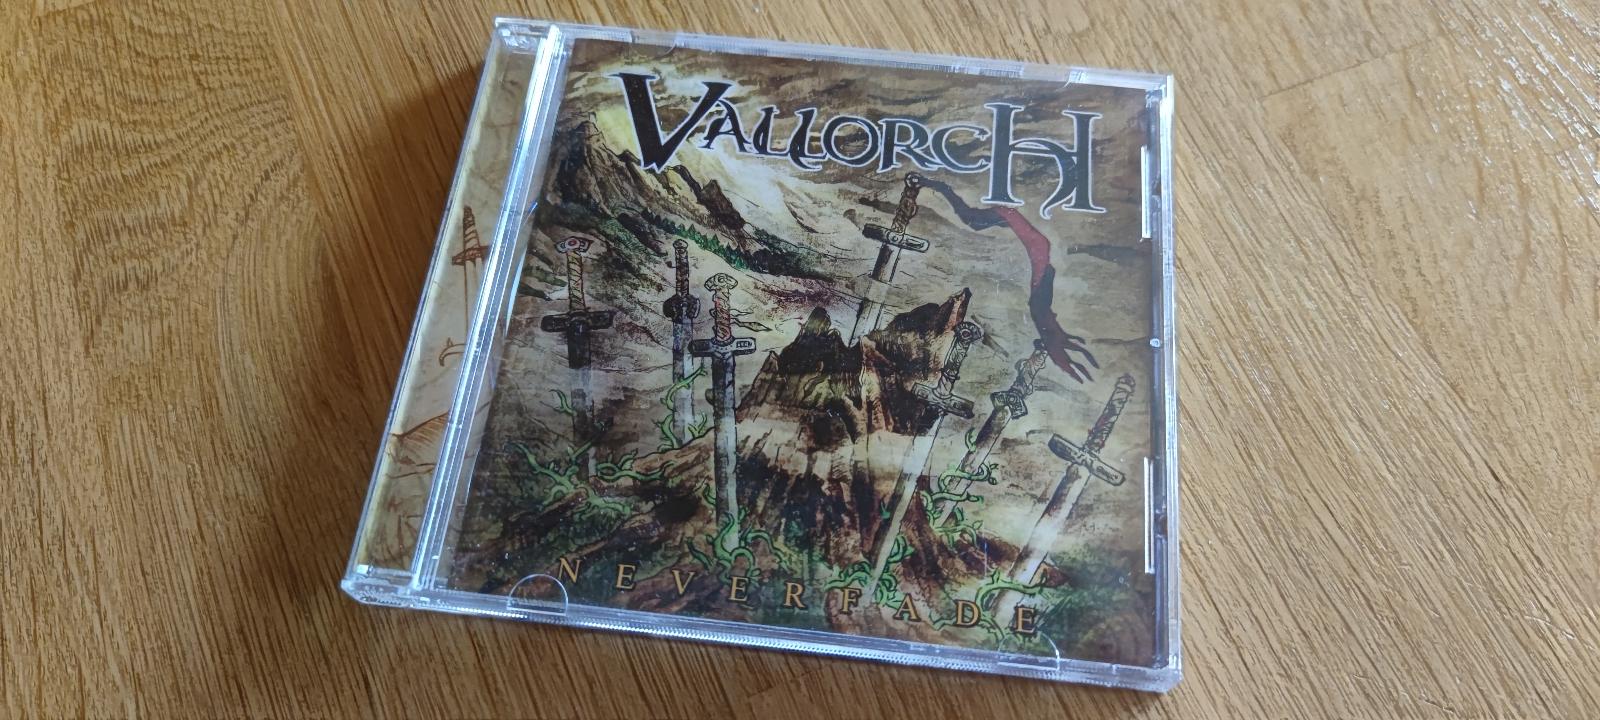 Vallorch - Neverfade (CD) Folk Metal - S PODPISMI! - Hudba na CD